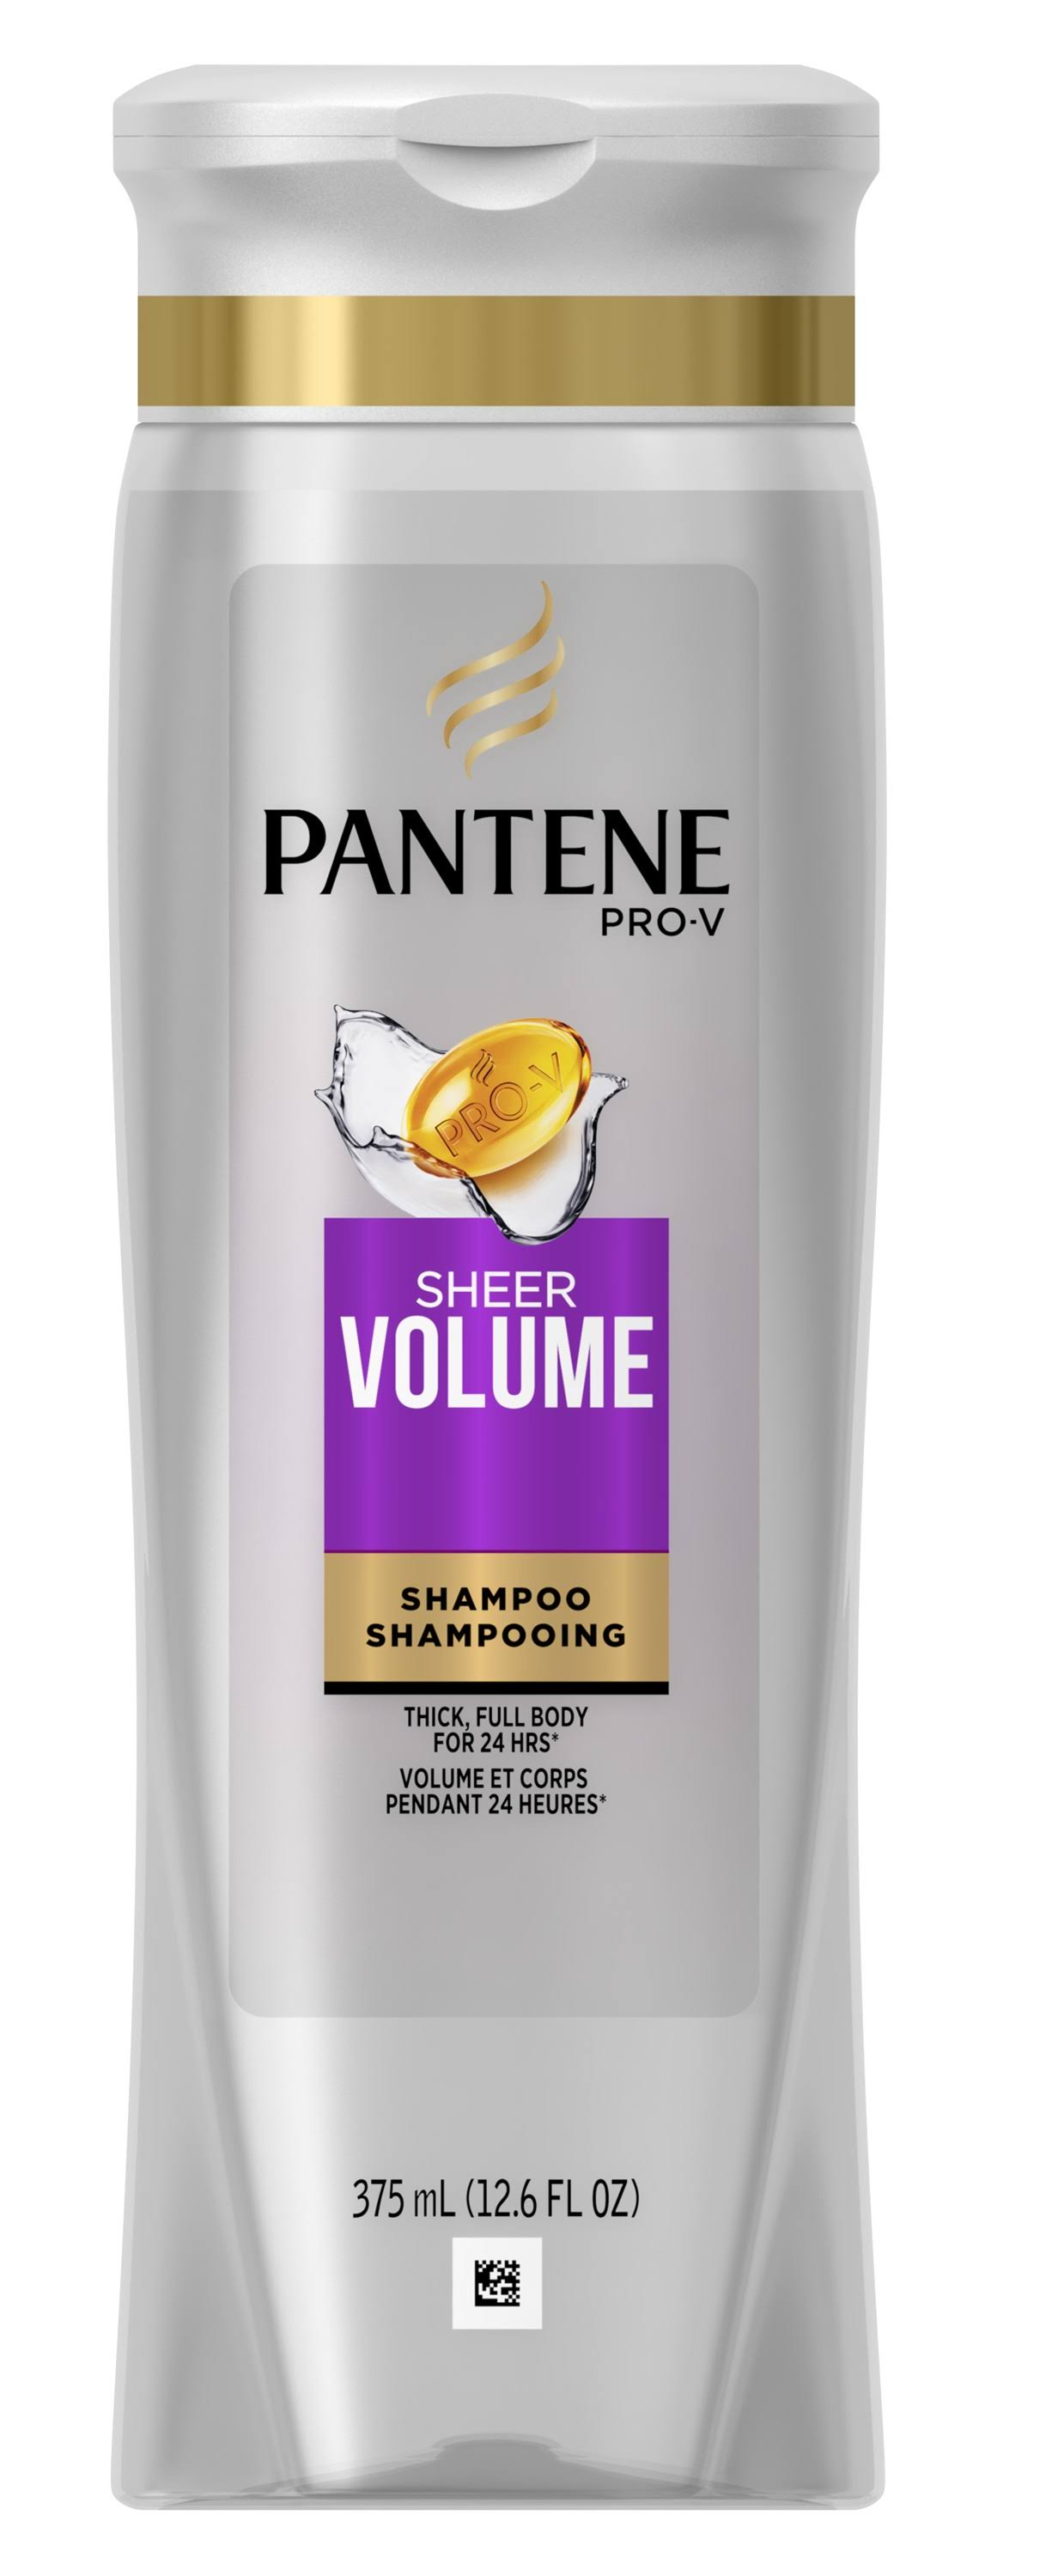 Pantene Pro-v Sheer Volume Weightless Shampoo - 375ml